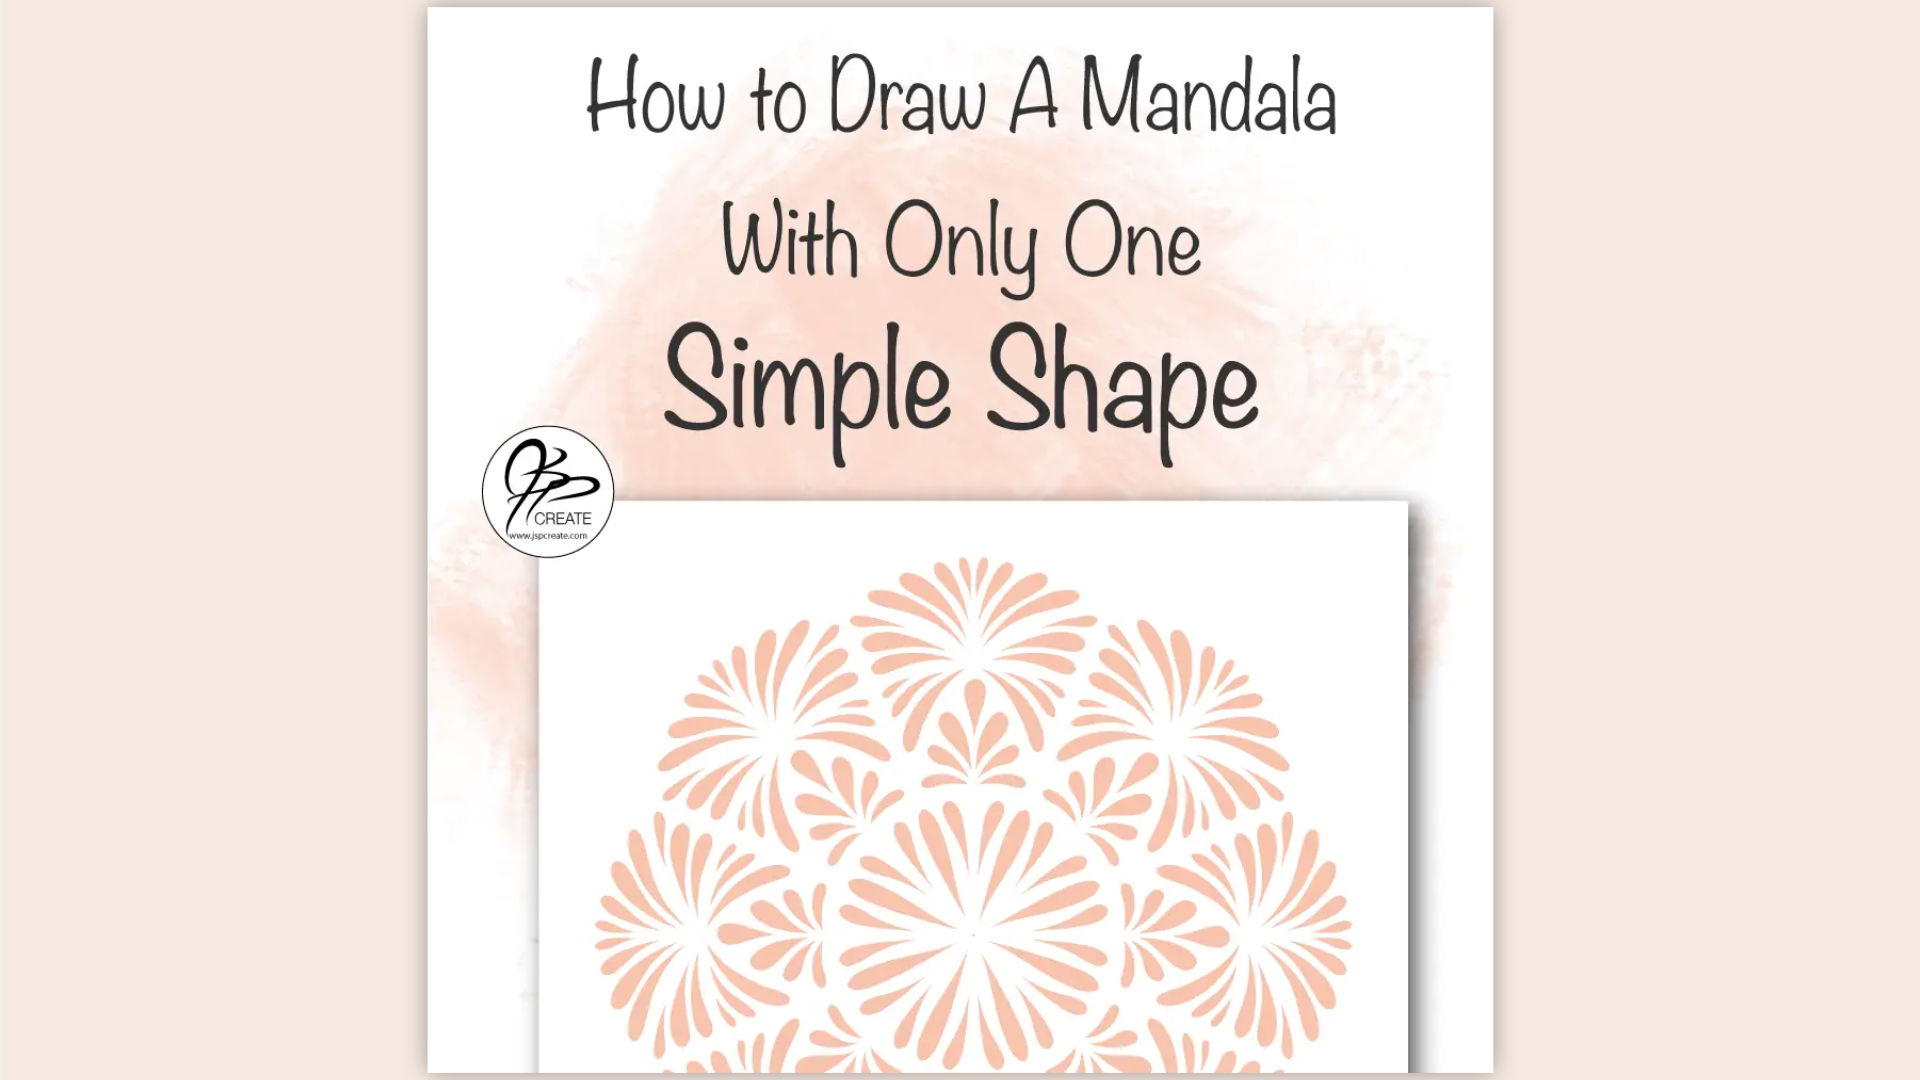 How to Draw A Mandala with One Simple Shape - JSPCREATE